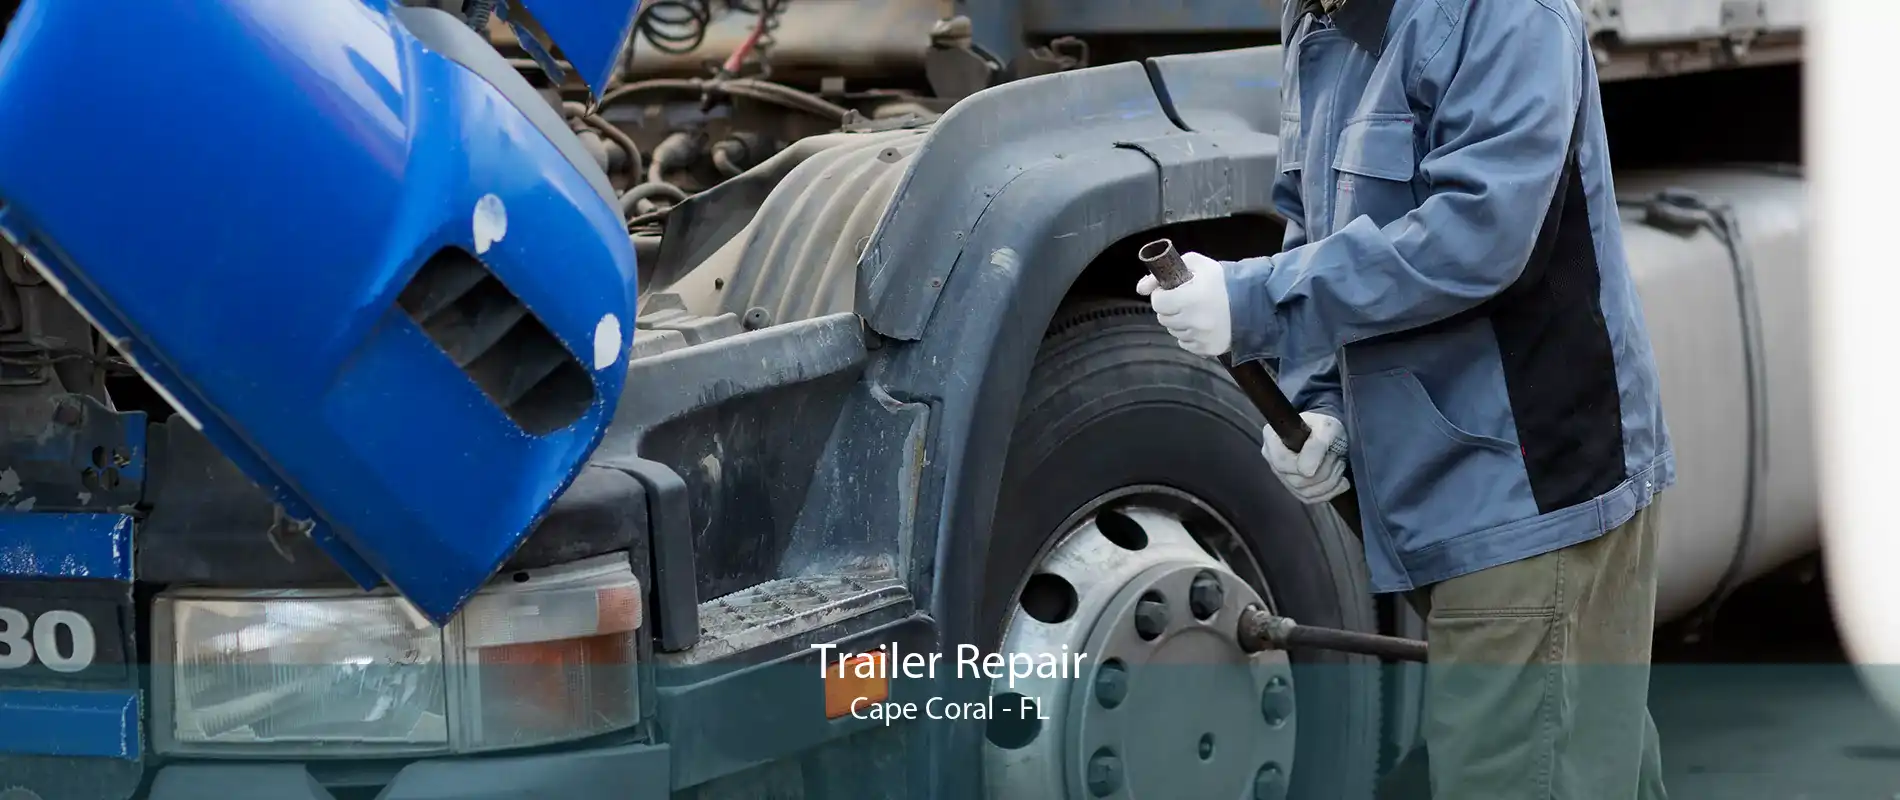 Trailer Repair Cape Coral - FL